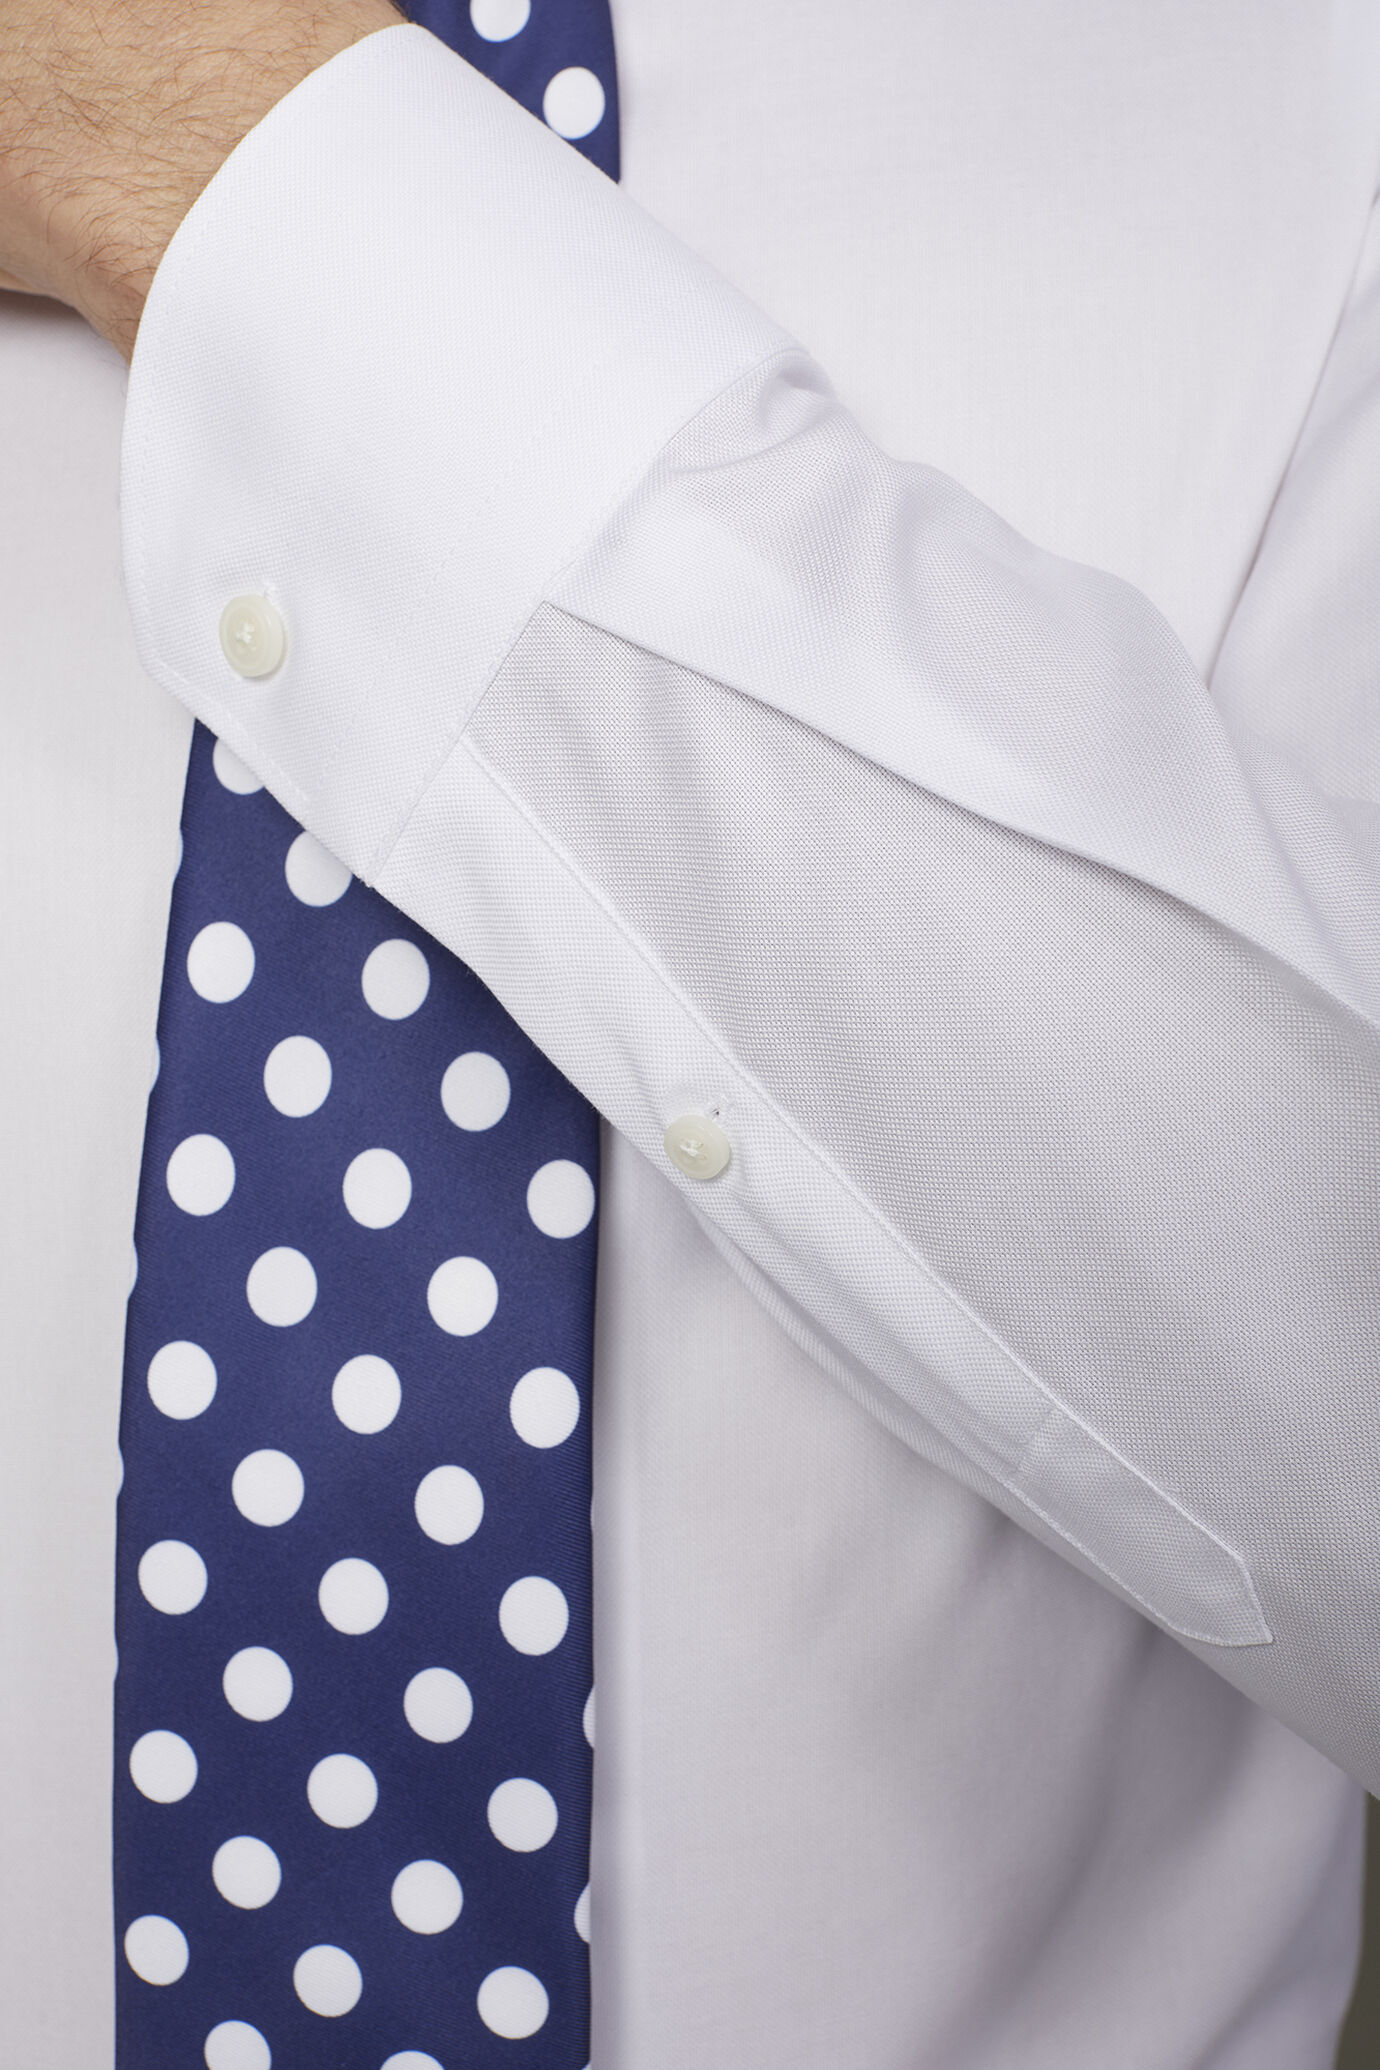 Men's shirt classic collar 100% cotton lightweight oxford fabric regular fit image number 4